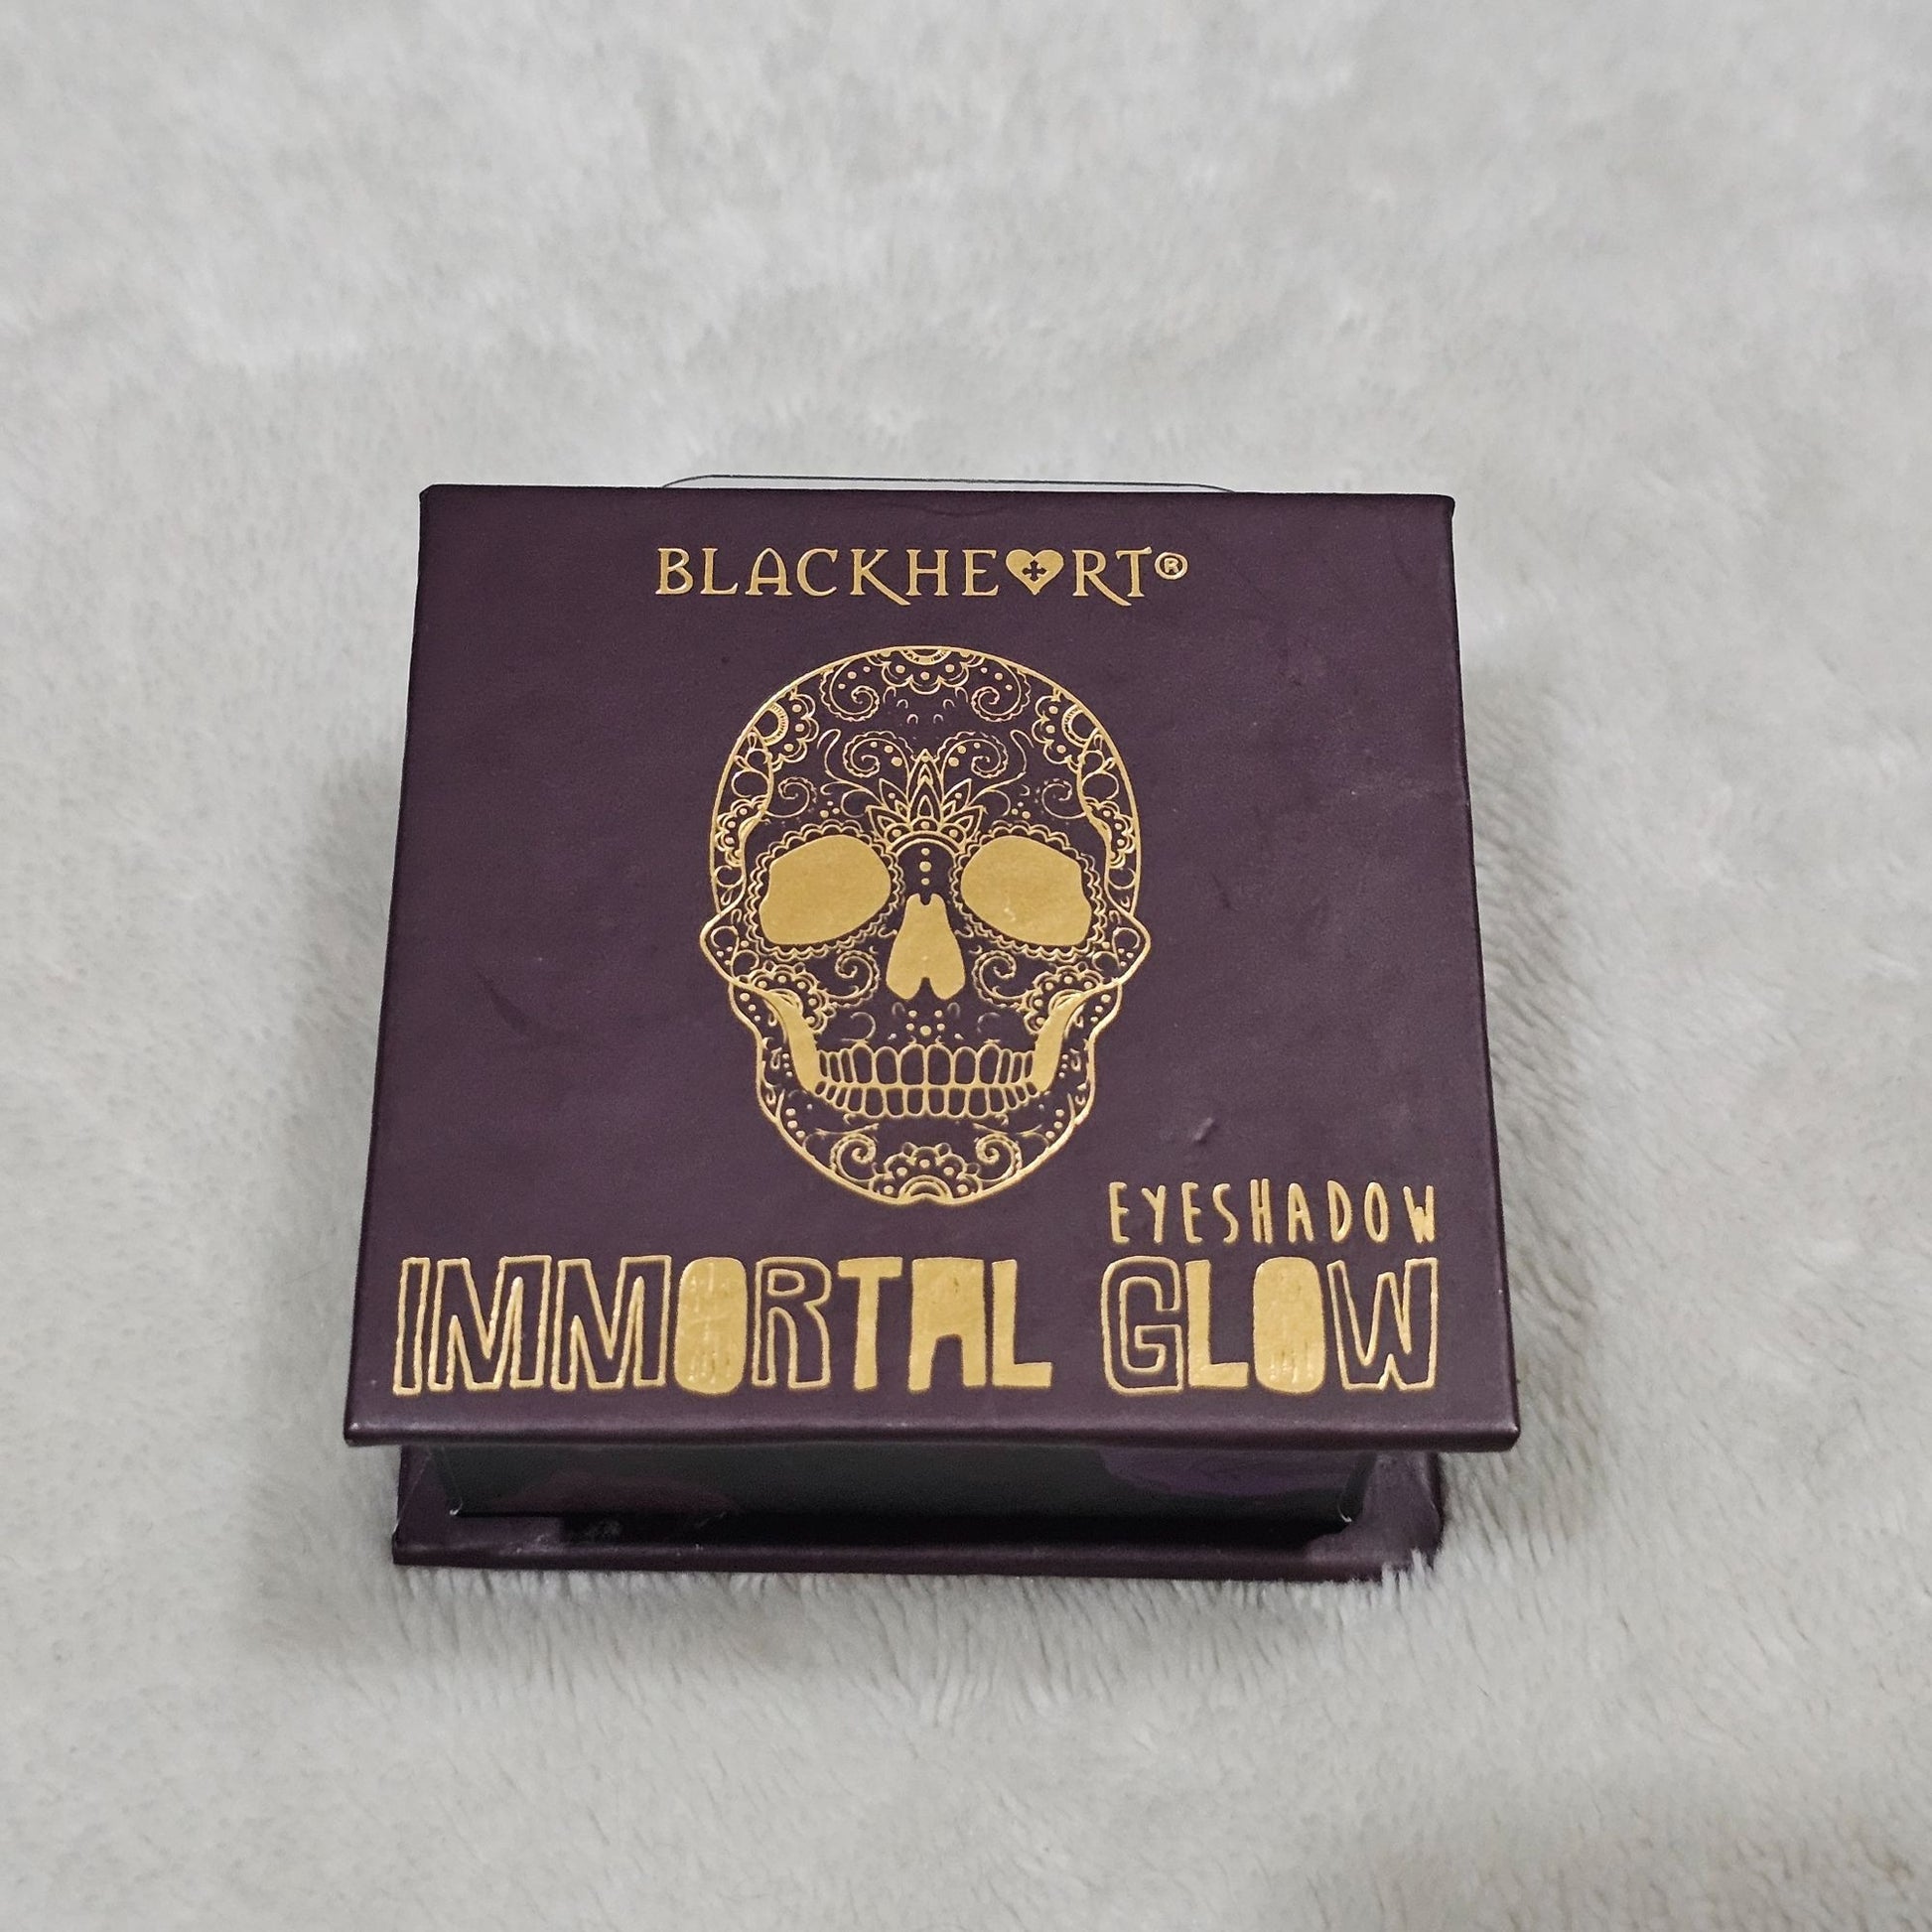 Blackheart Immortal Glow Eyeshadow Box Marbled Brown - Blackheart - Eyeshadows